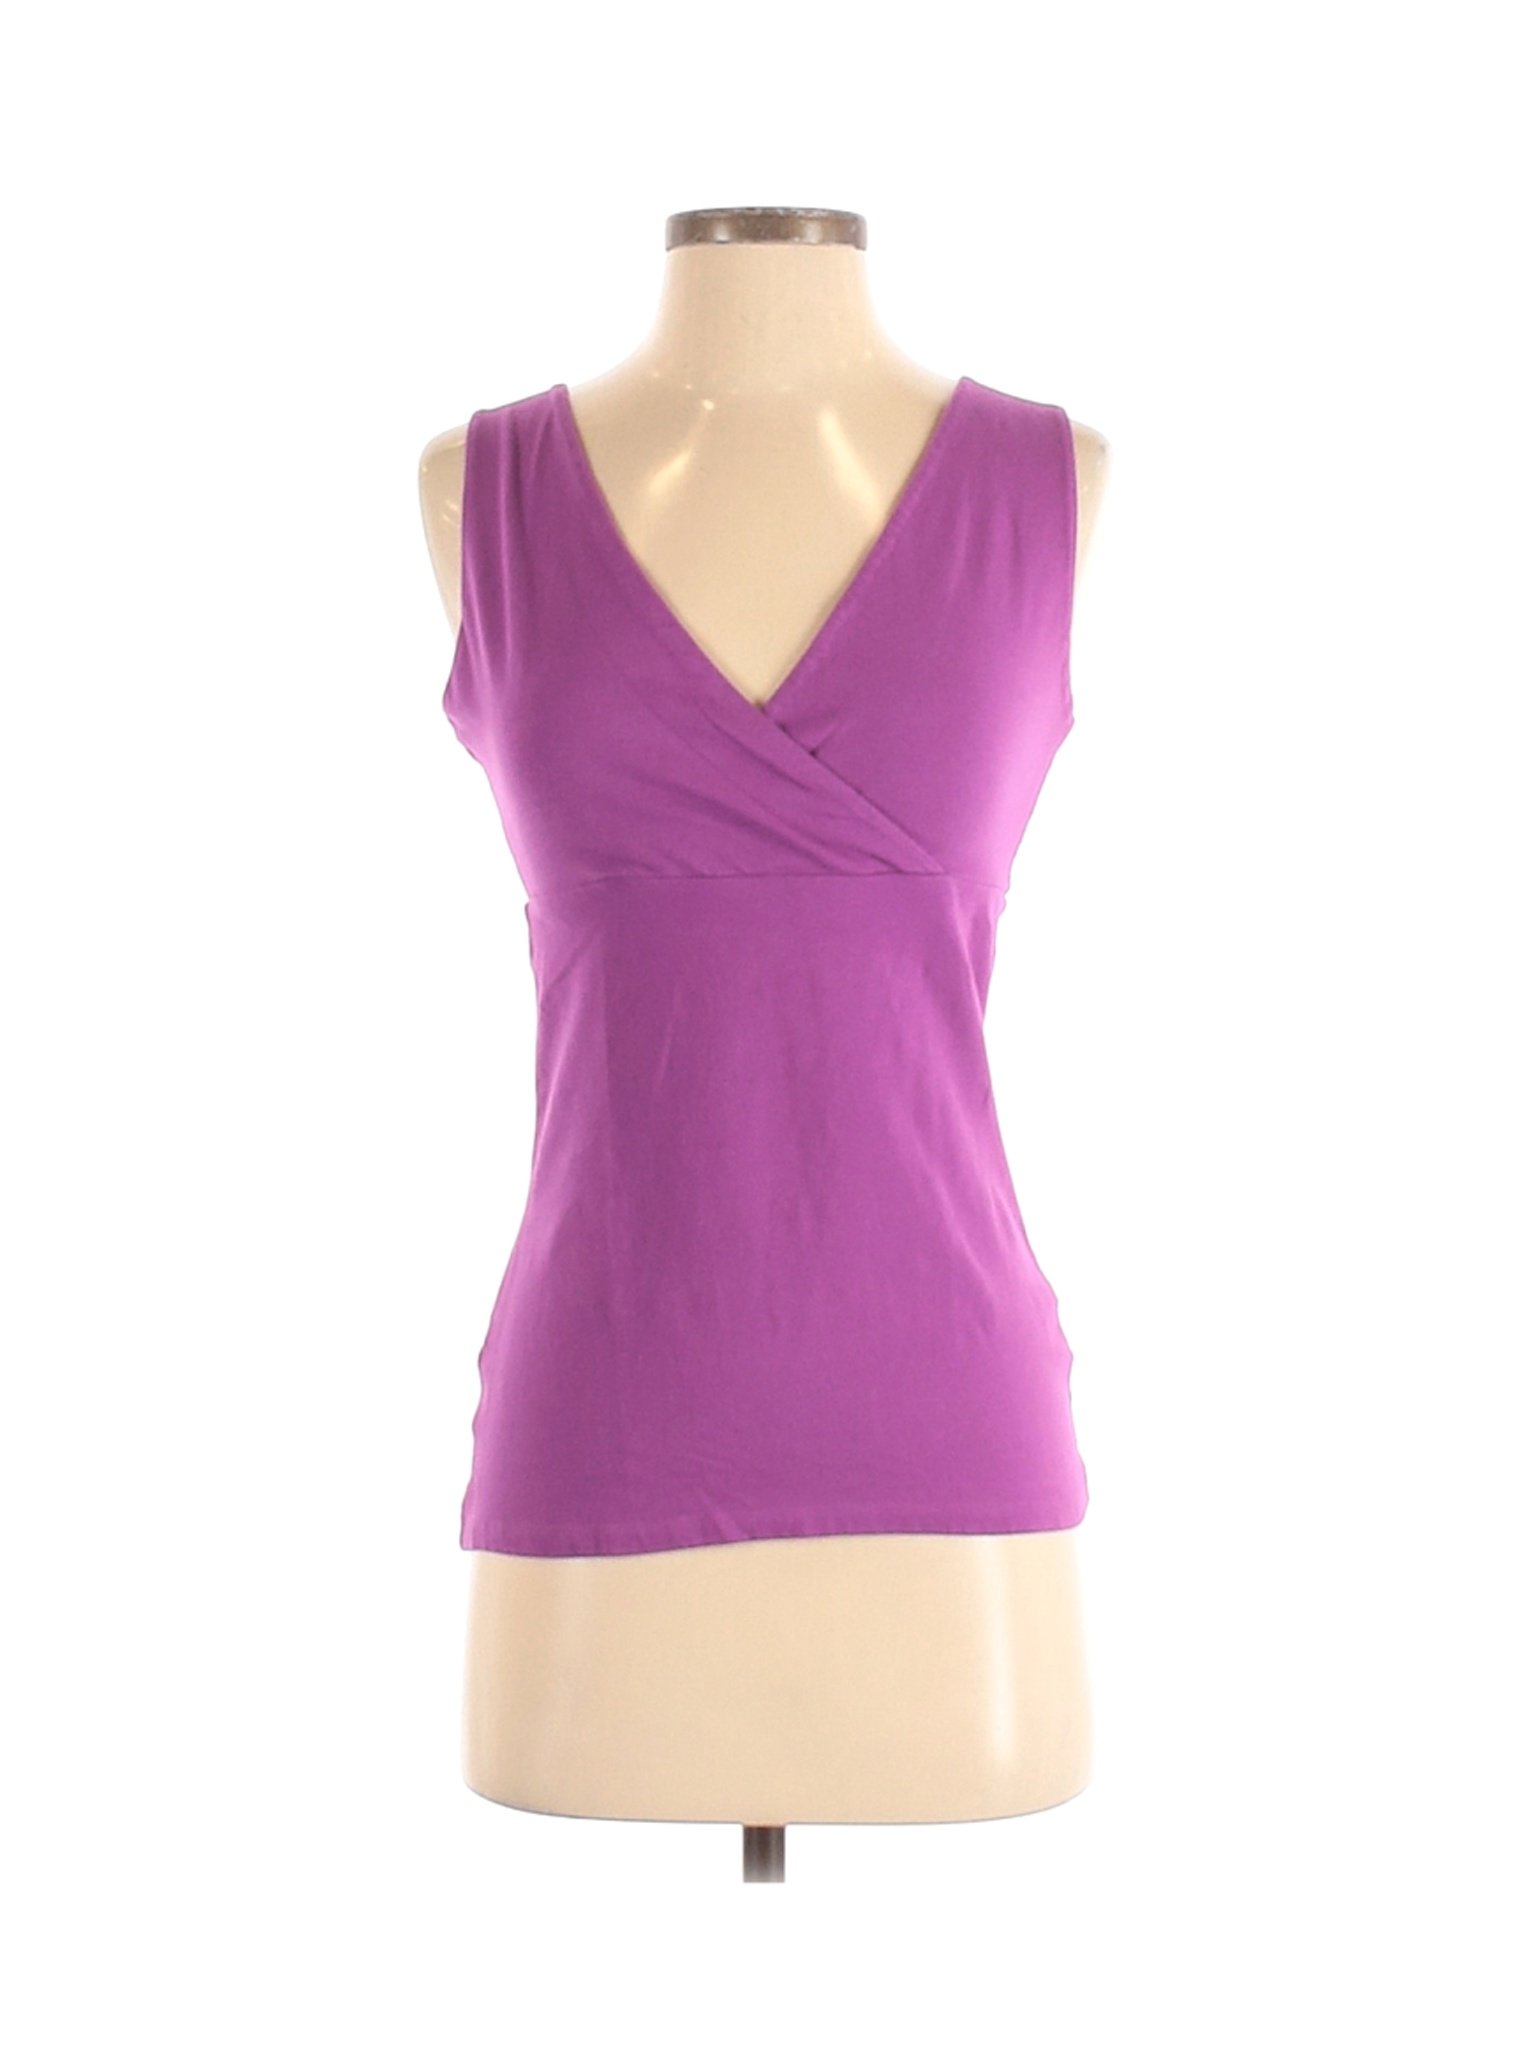 Merona Women Purple Sleeveless Top S | eBay